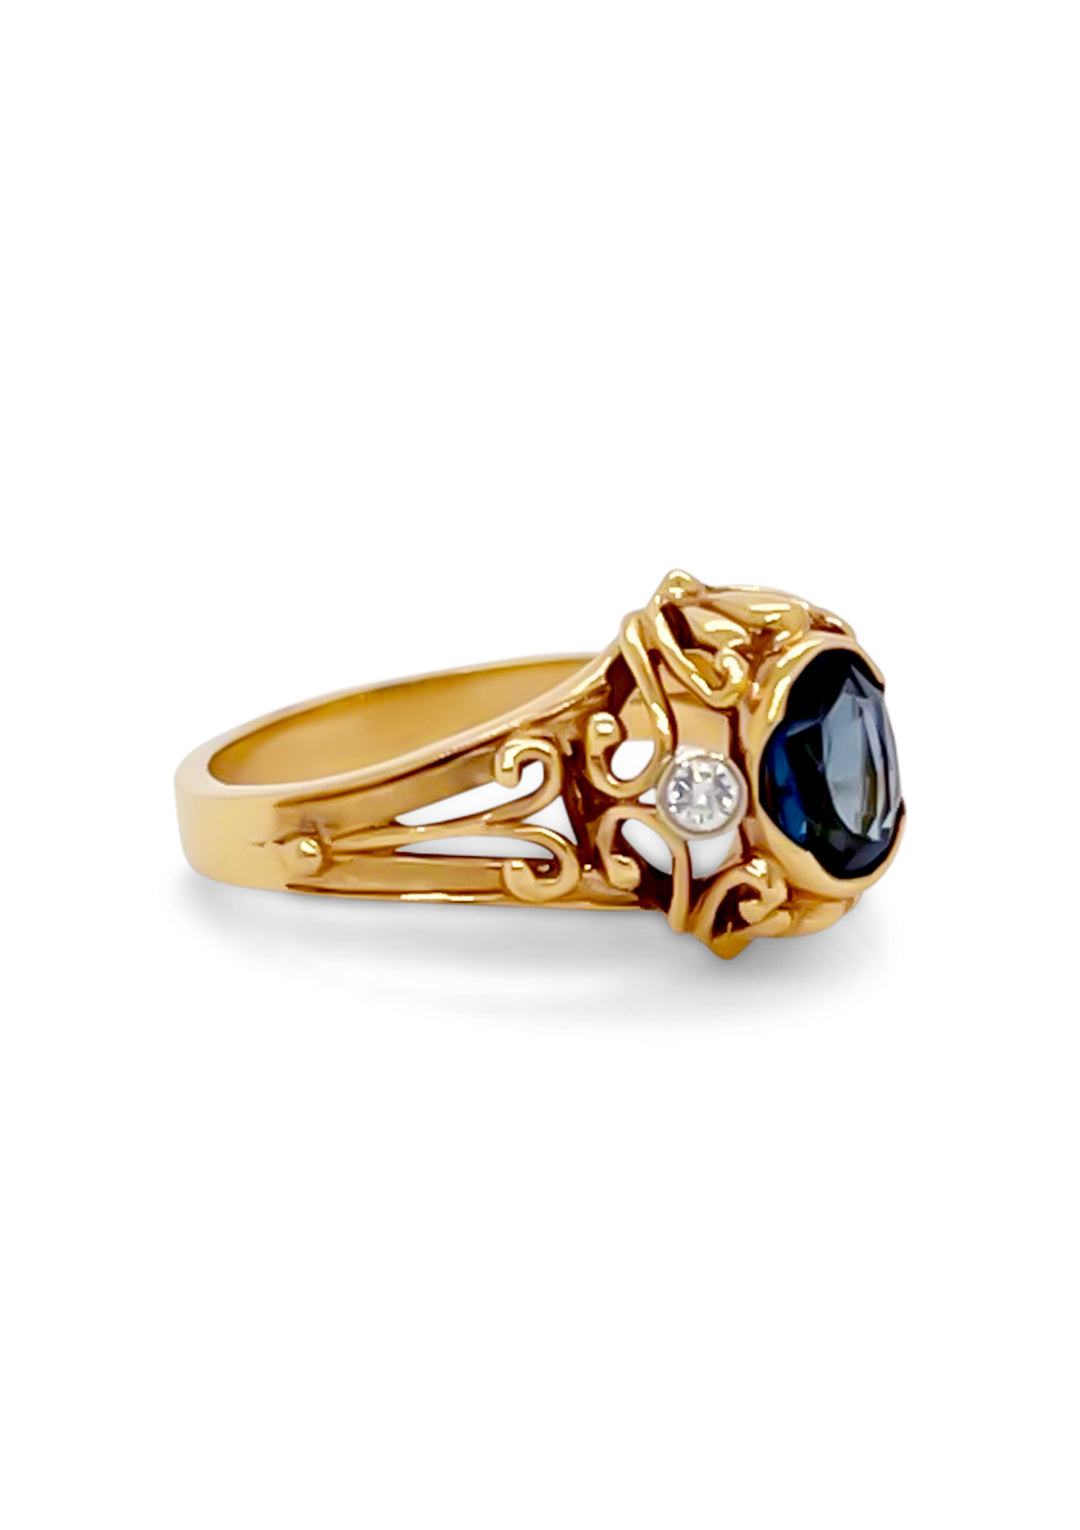 14K Yellow Gold 1.11 Carat Sapphire And Diamond Ring